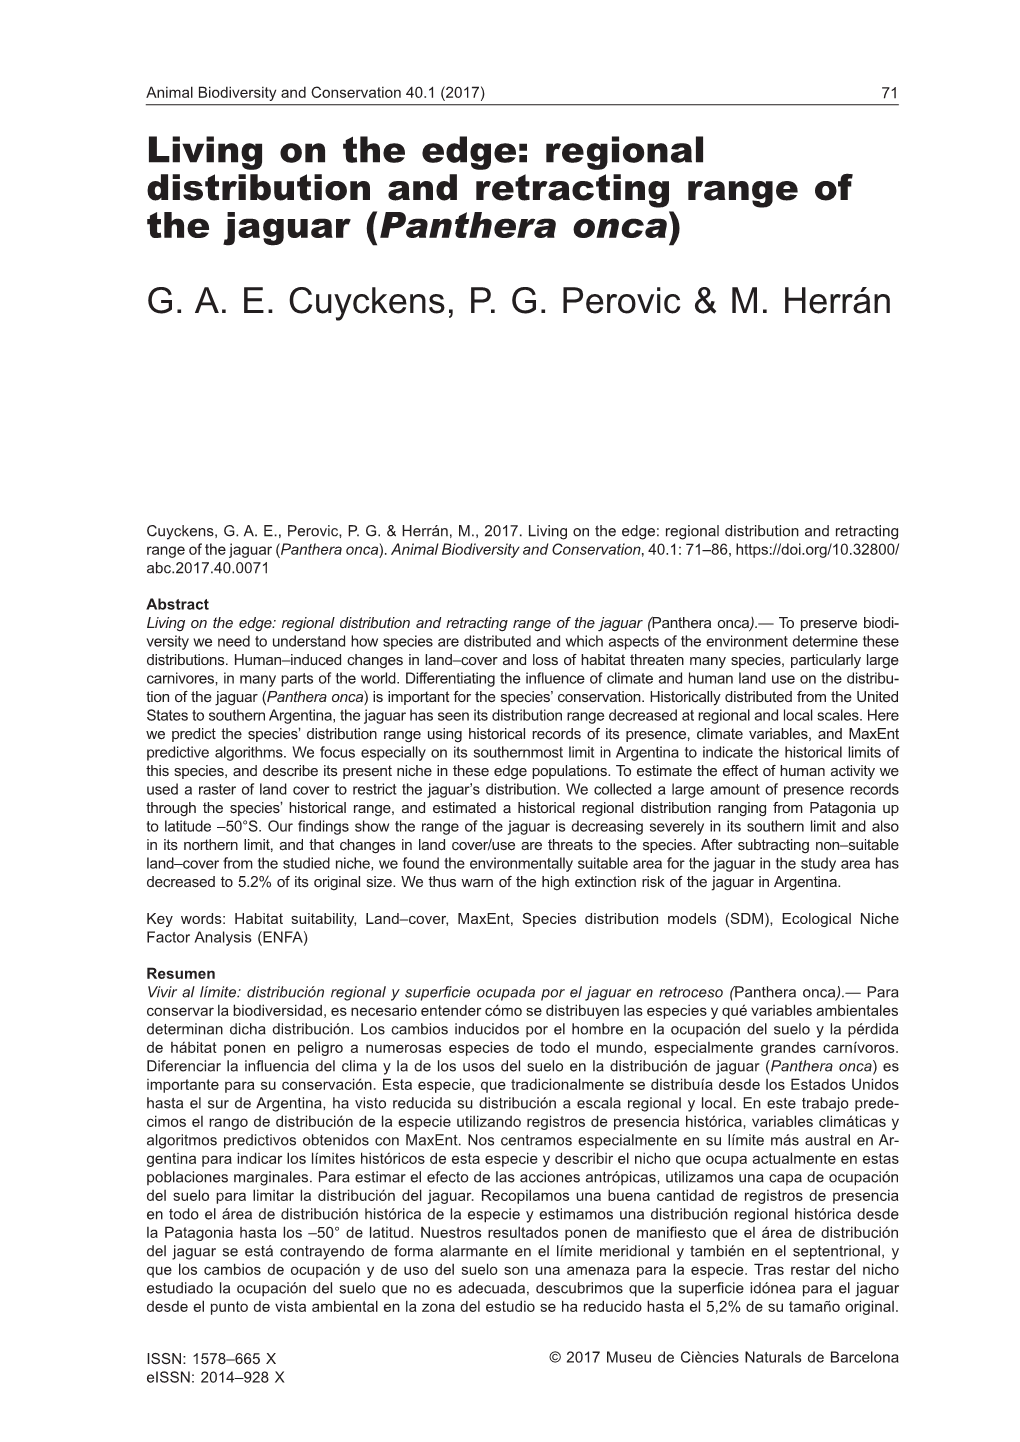 Regional Distribution and Retracting Range of the Jaguar (Panthera Onca)